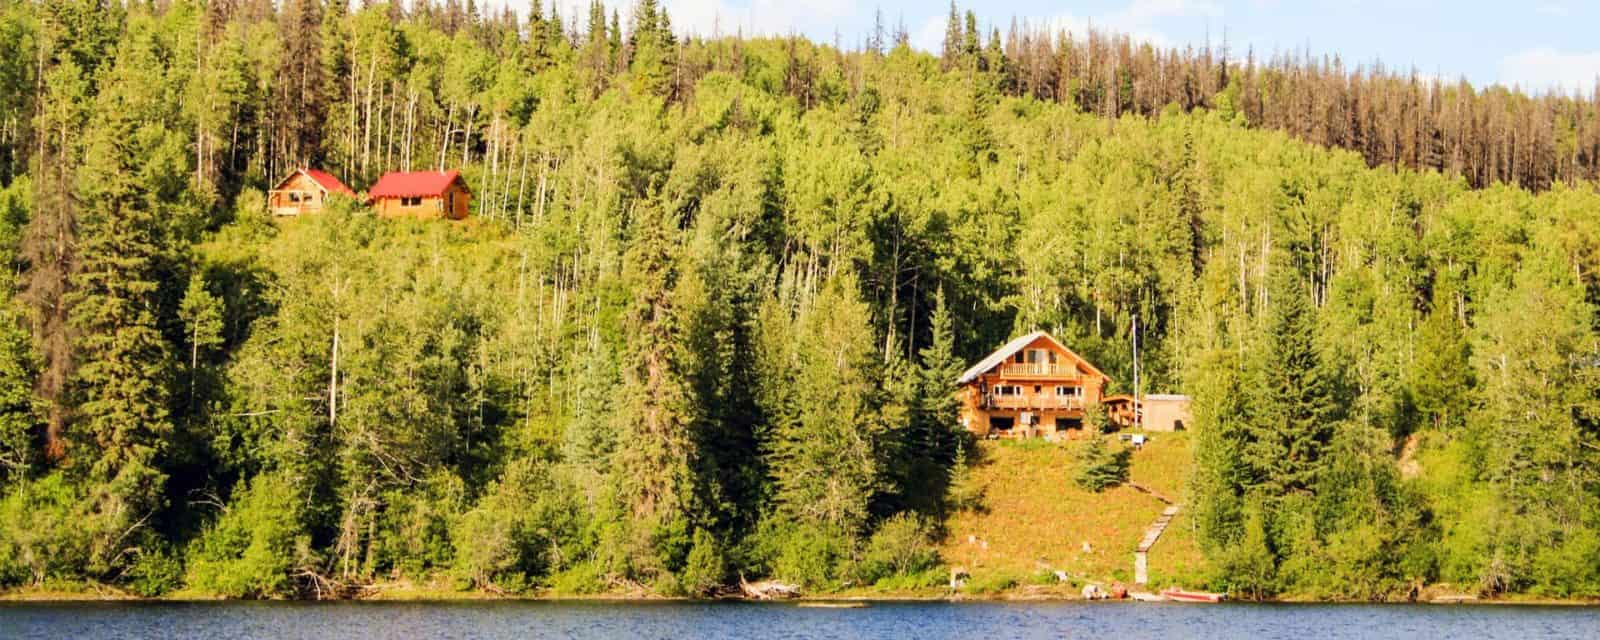 Lodge-Abenteuer in Westkanadas Natur